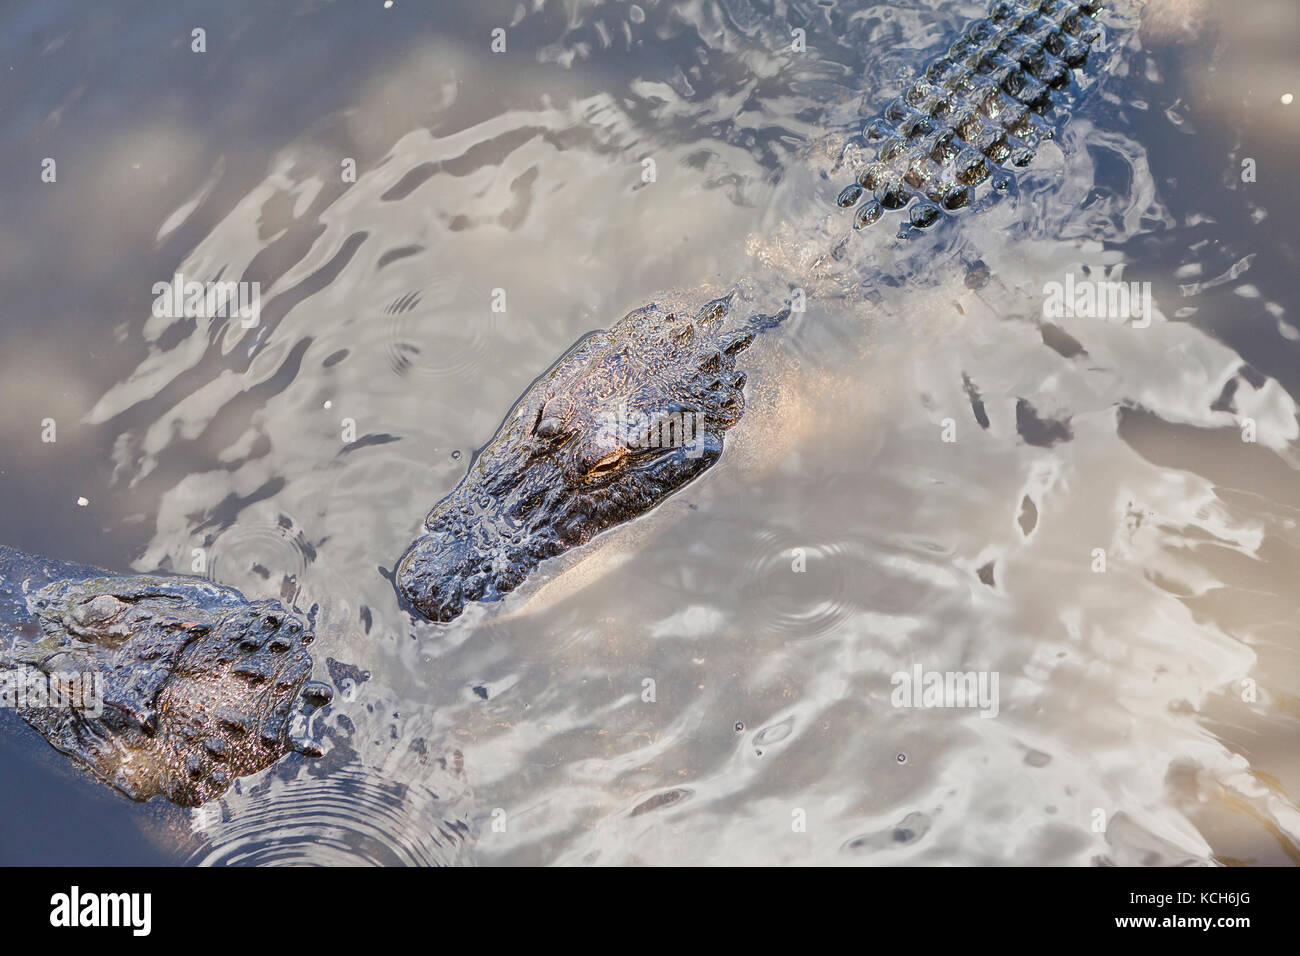 Adult American alligators (Alligator mississippiensis) basking in sun at Gatorland - Orlando, Florida USA Stock Photo